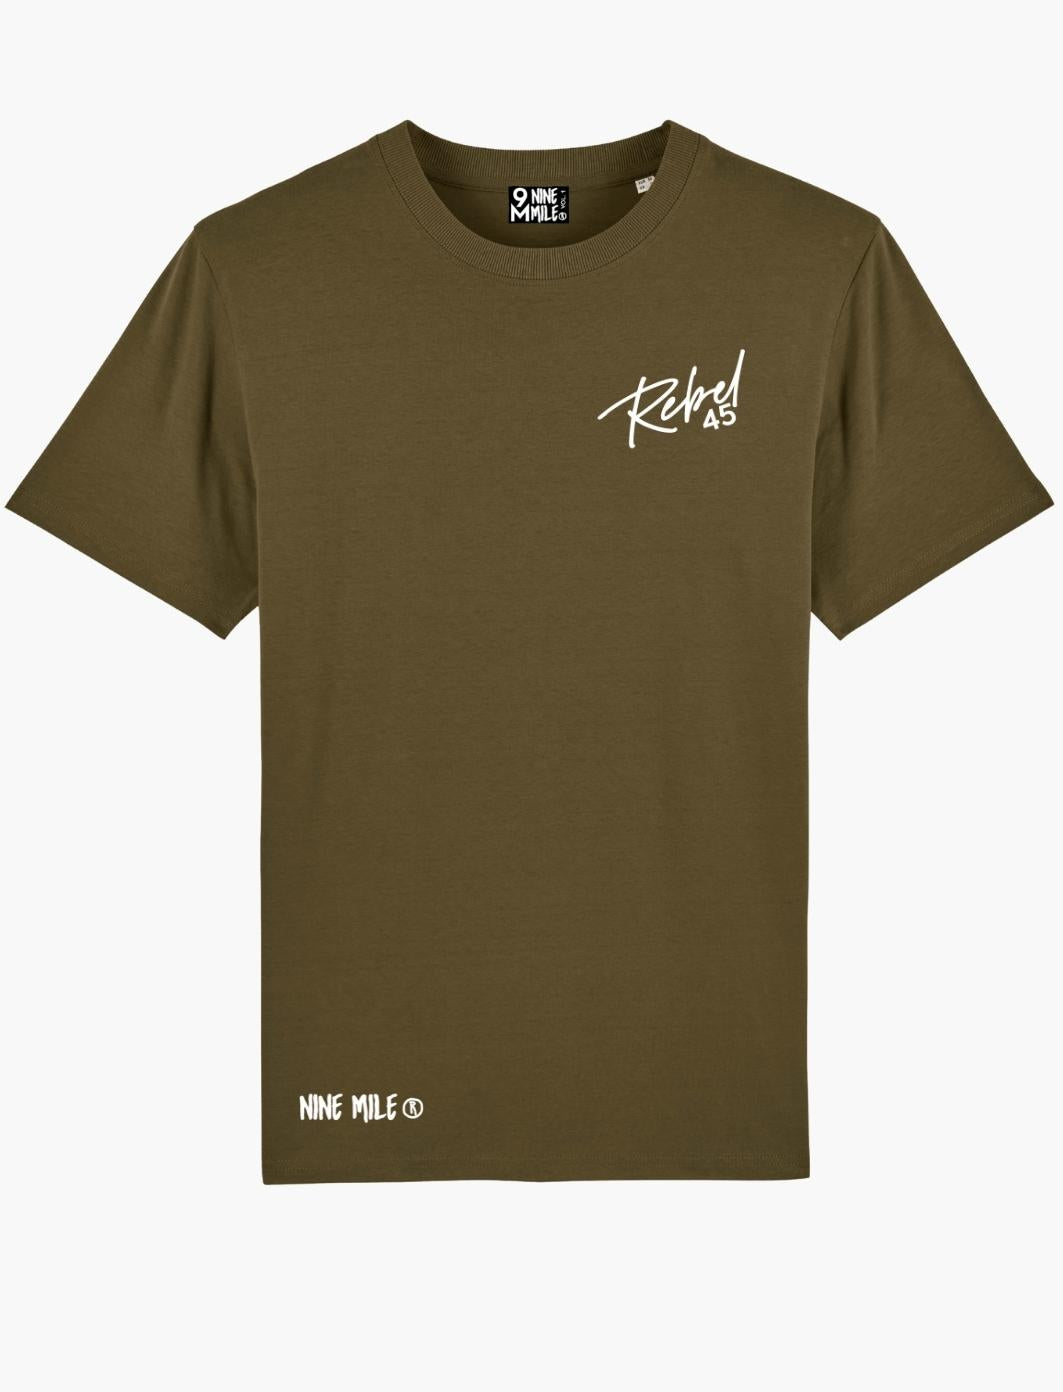 Nine Mile Rebel 45 khaki t-shirt made from organic cotton.